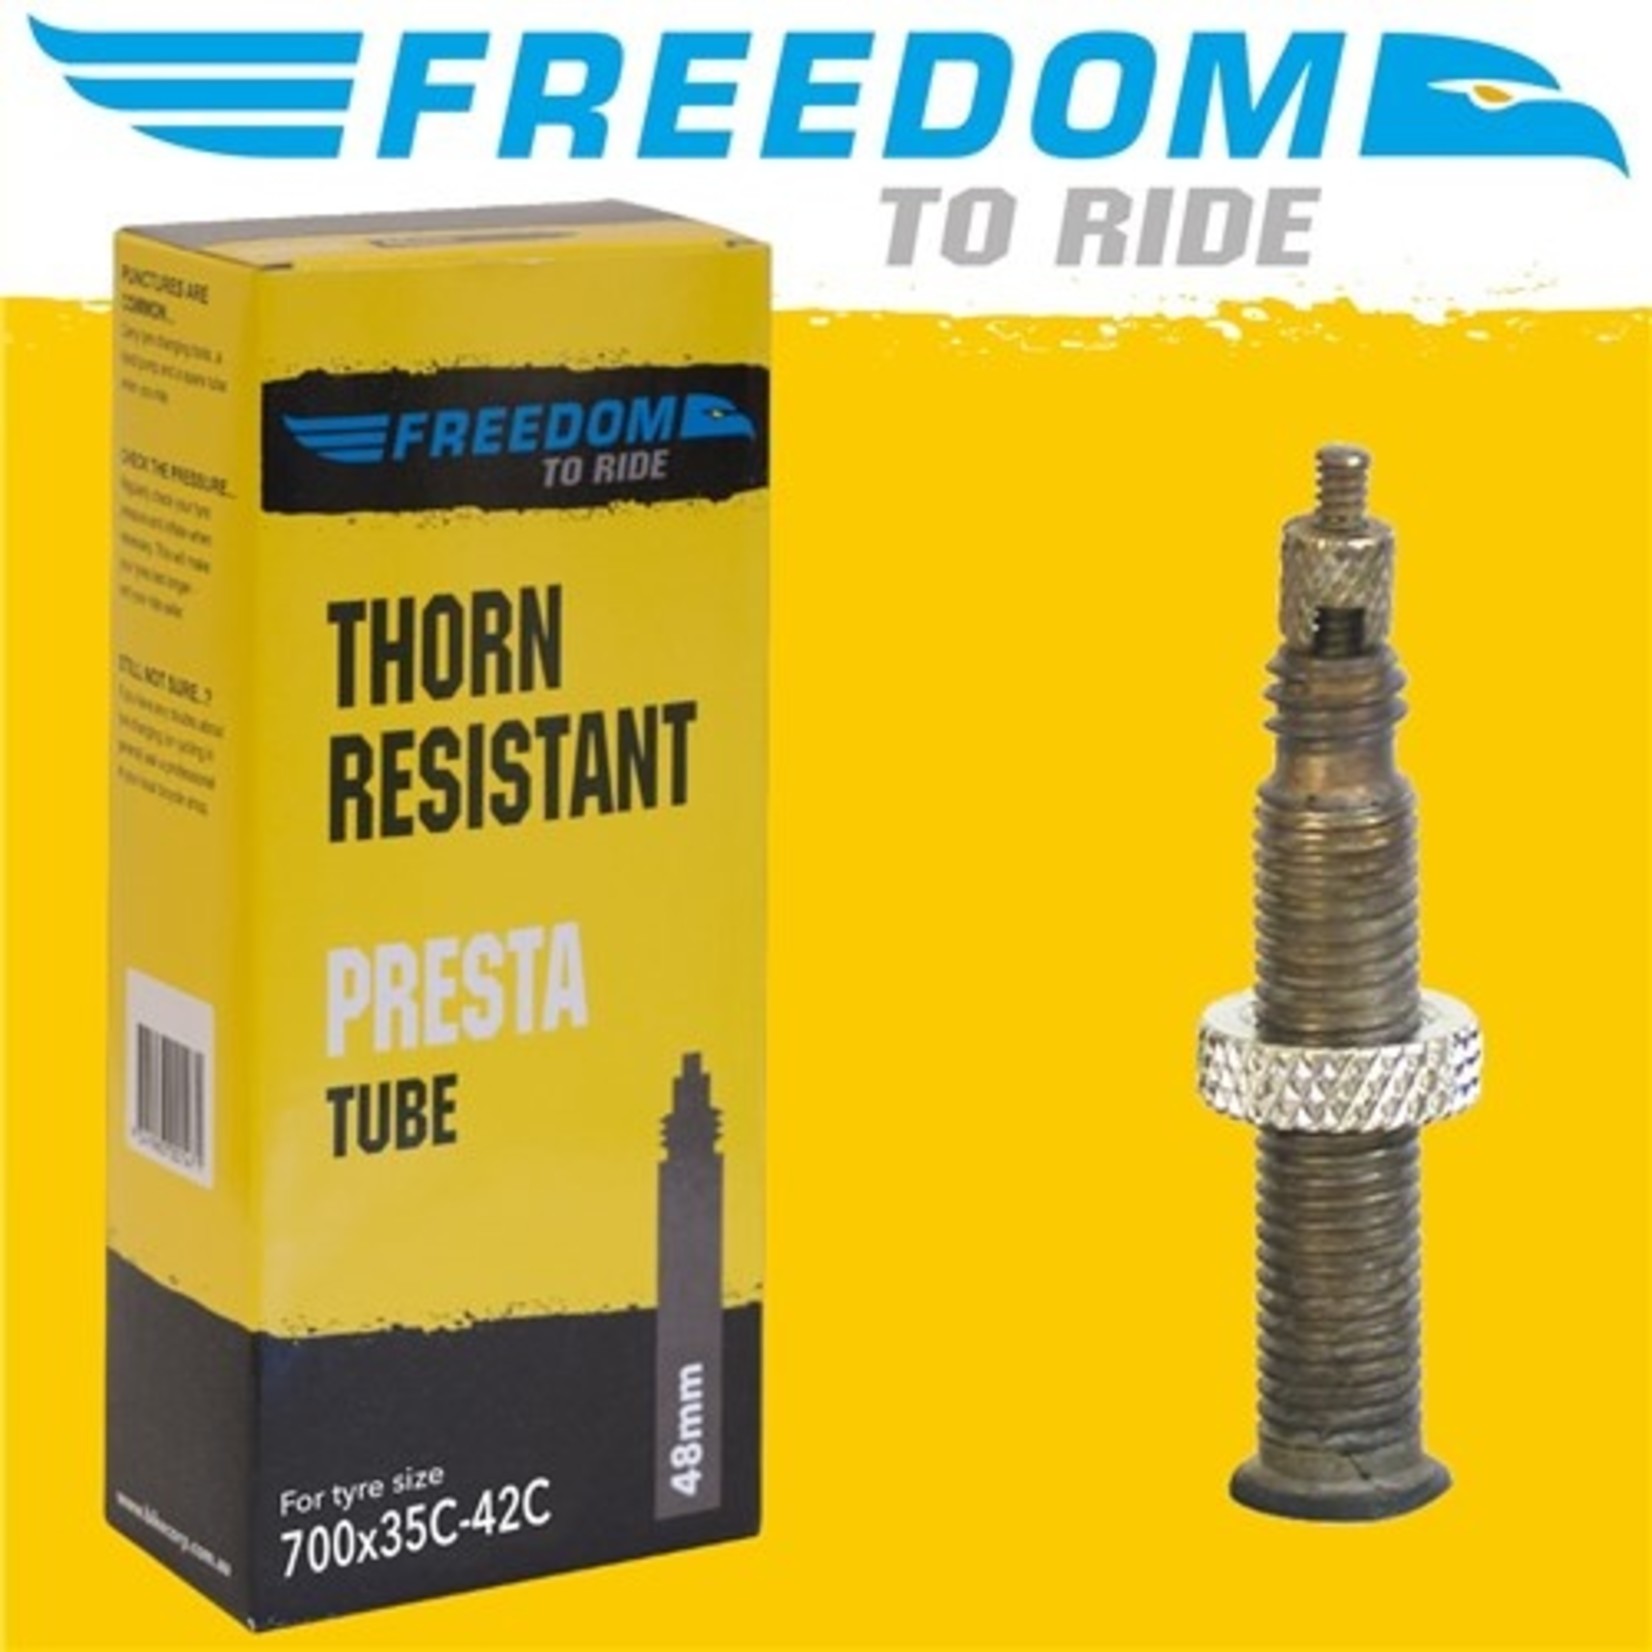 Freedom Freedom Bike Tube - 700 X 35C-42C - Thorn Resistant Presta Valve 48mm